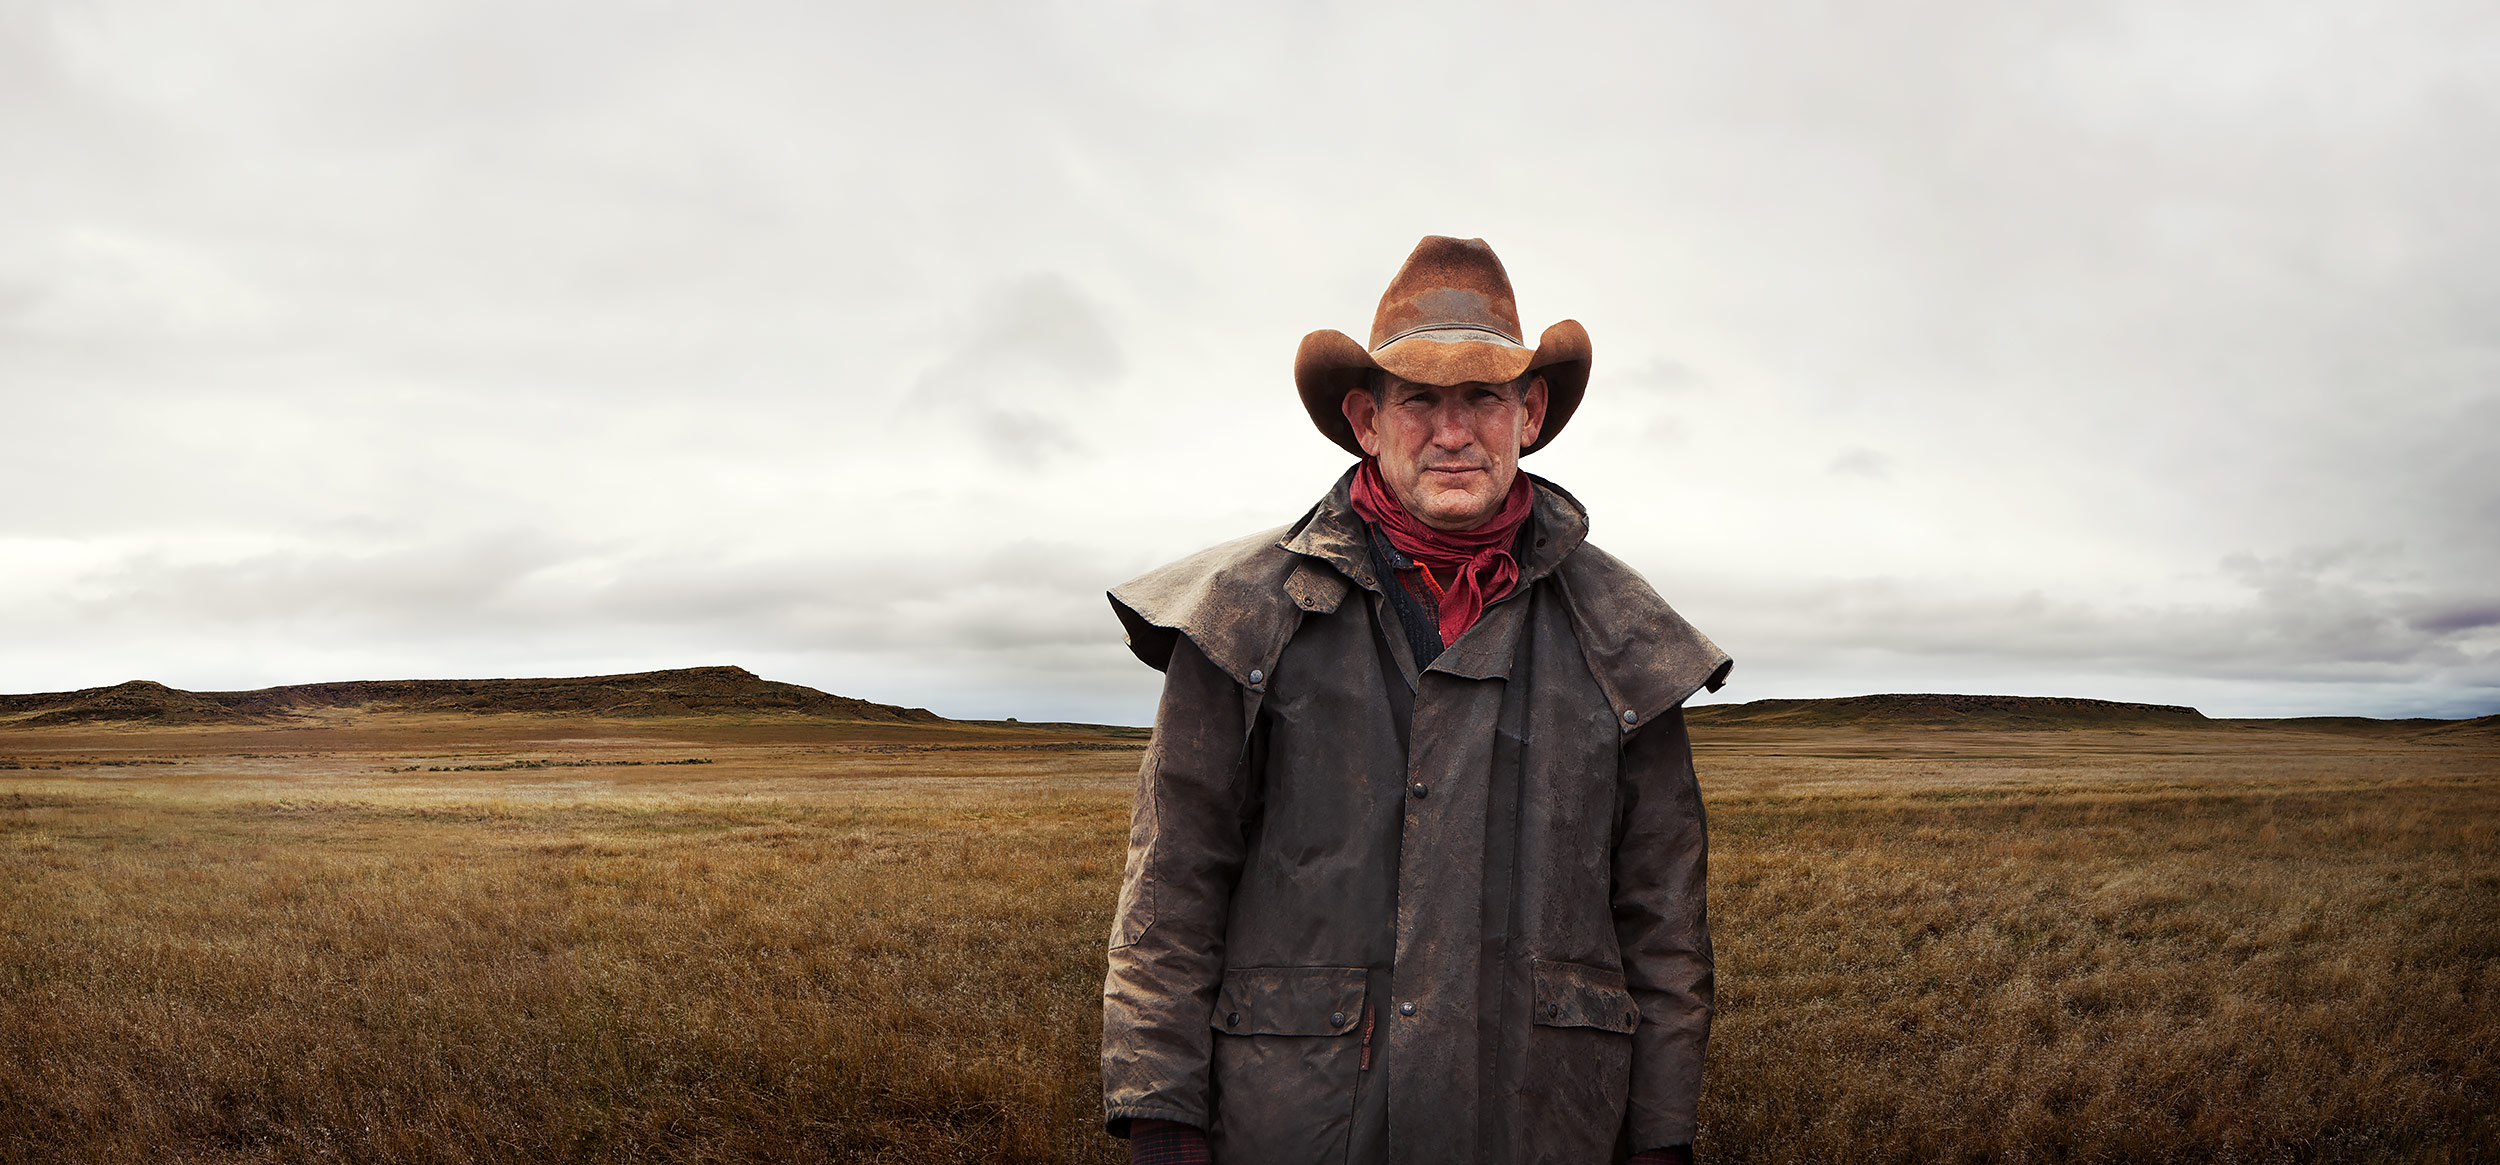 Portrait of a lone cowboy standing in a barren landscape